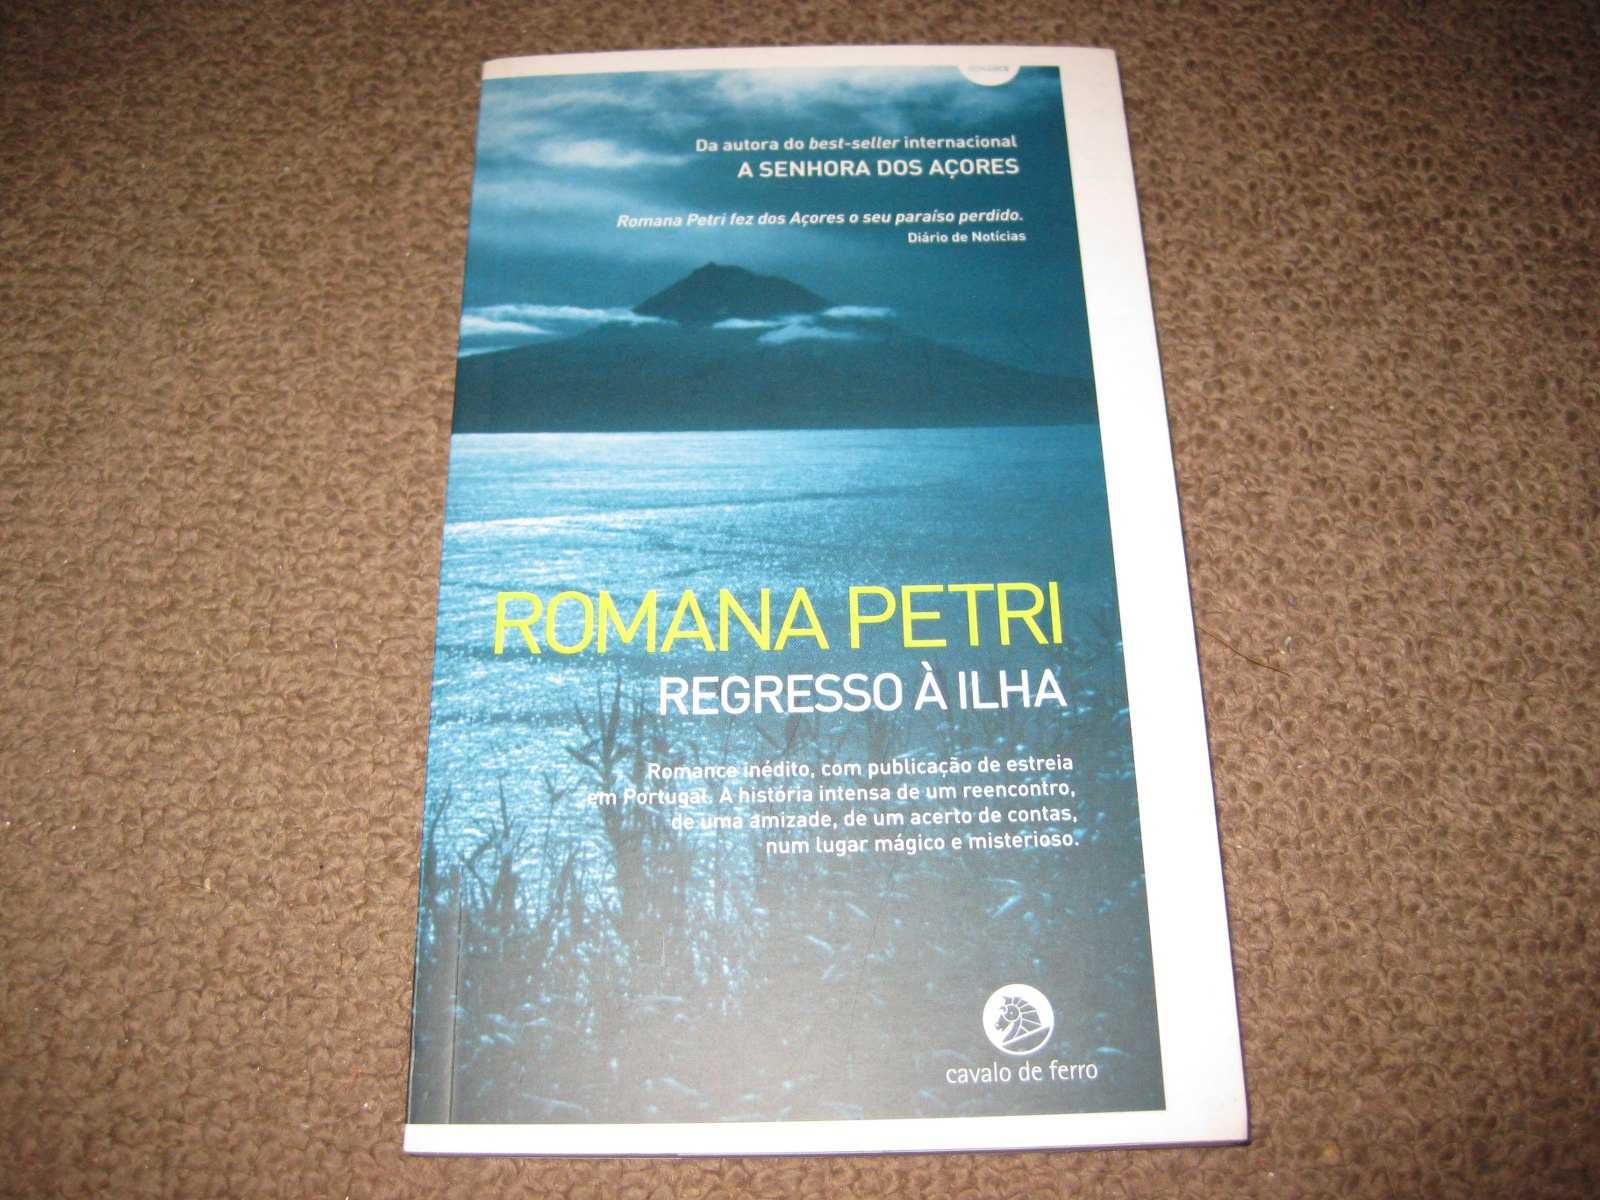 Livro "Regresso á Ilha" de Romana Petri